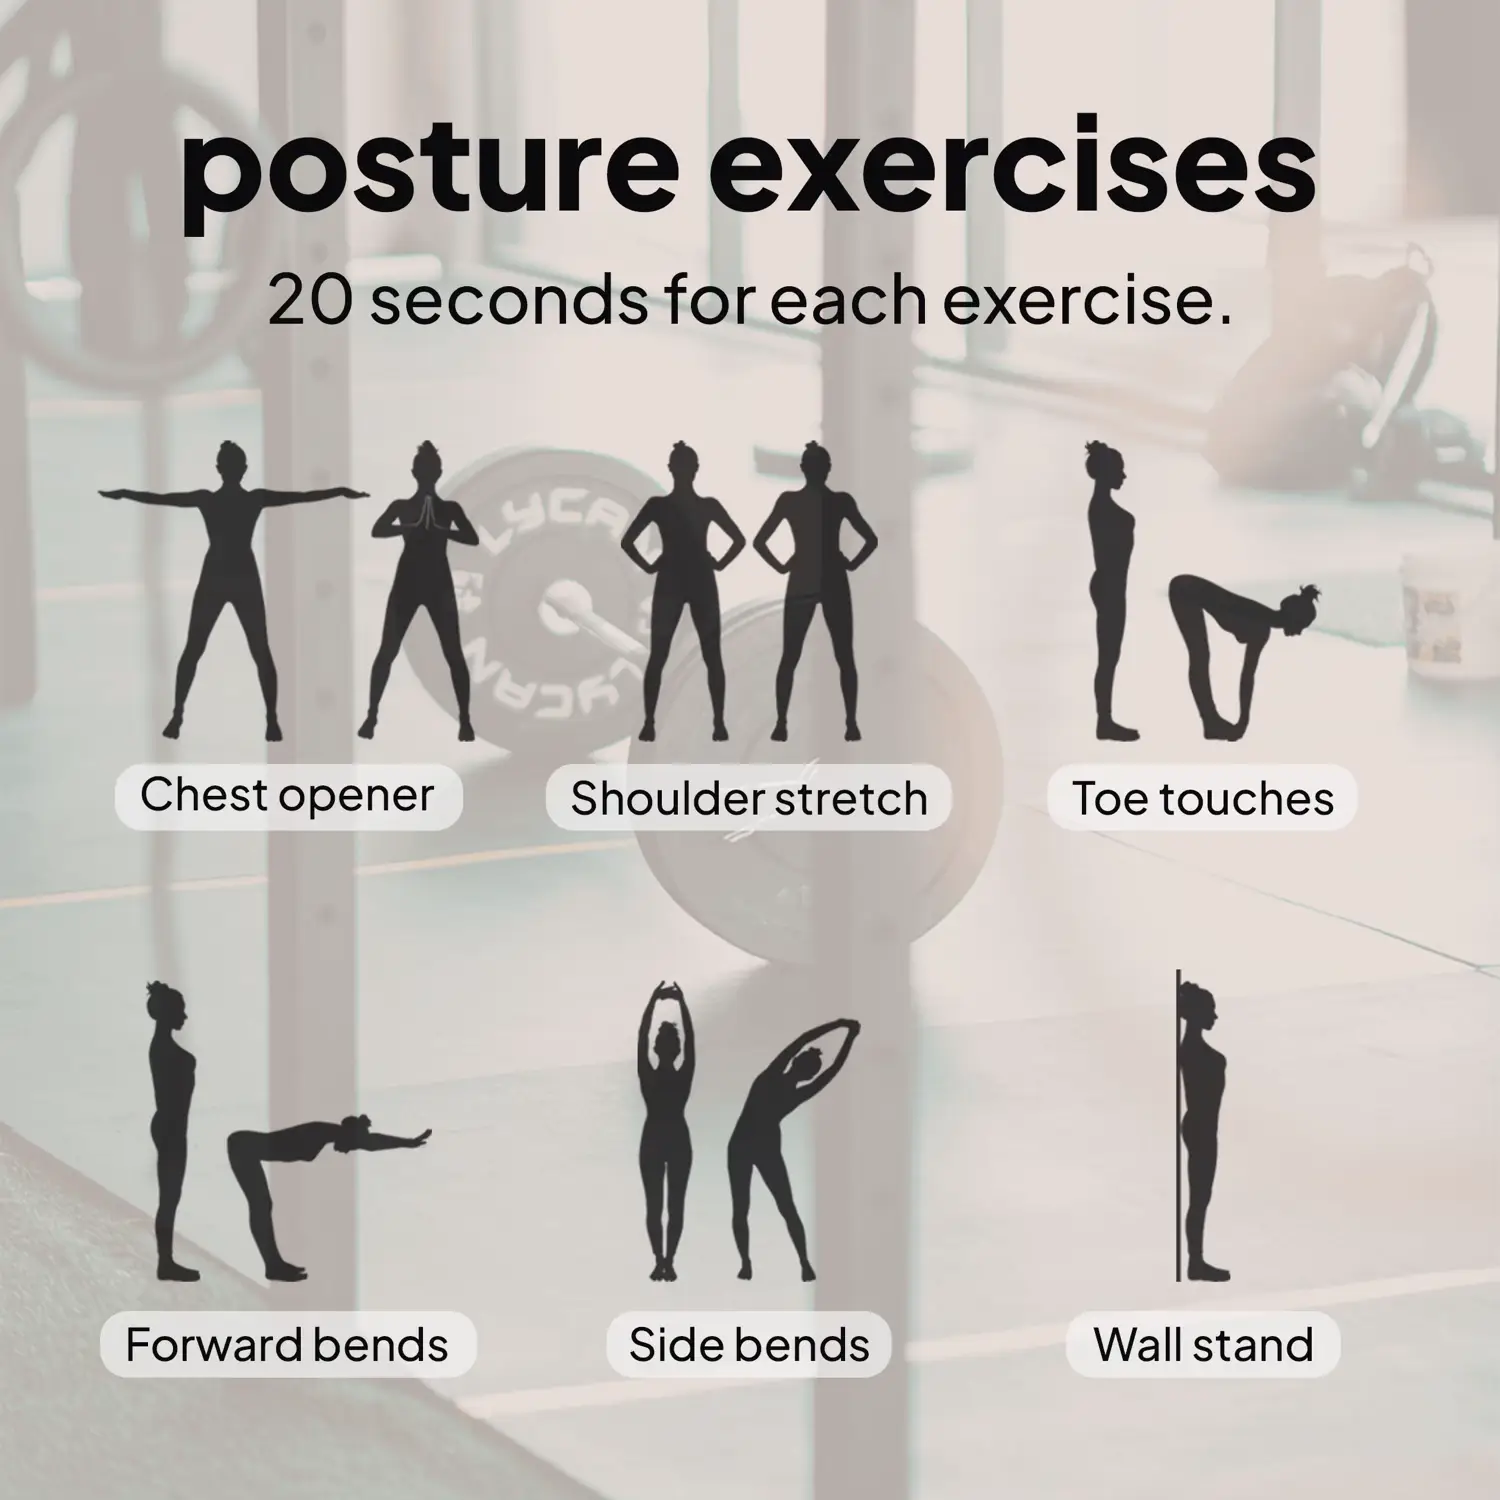 back exercises for posture - Lemon8 Search